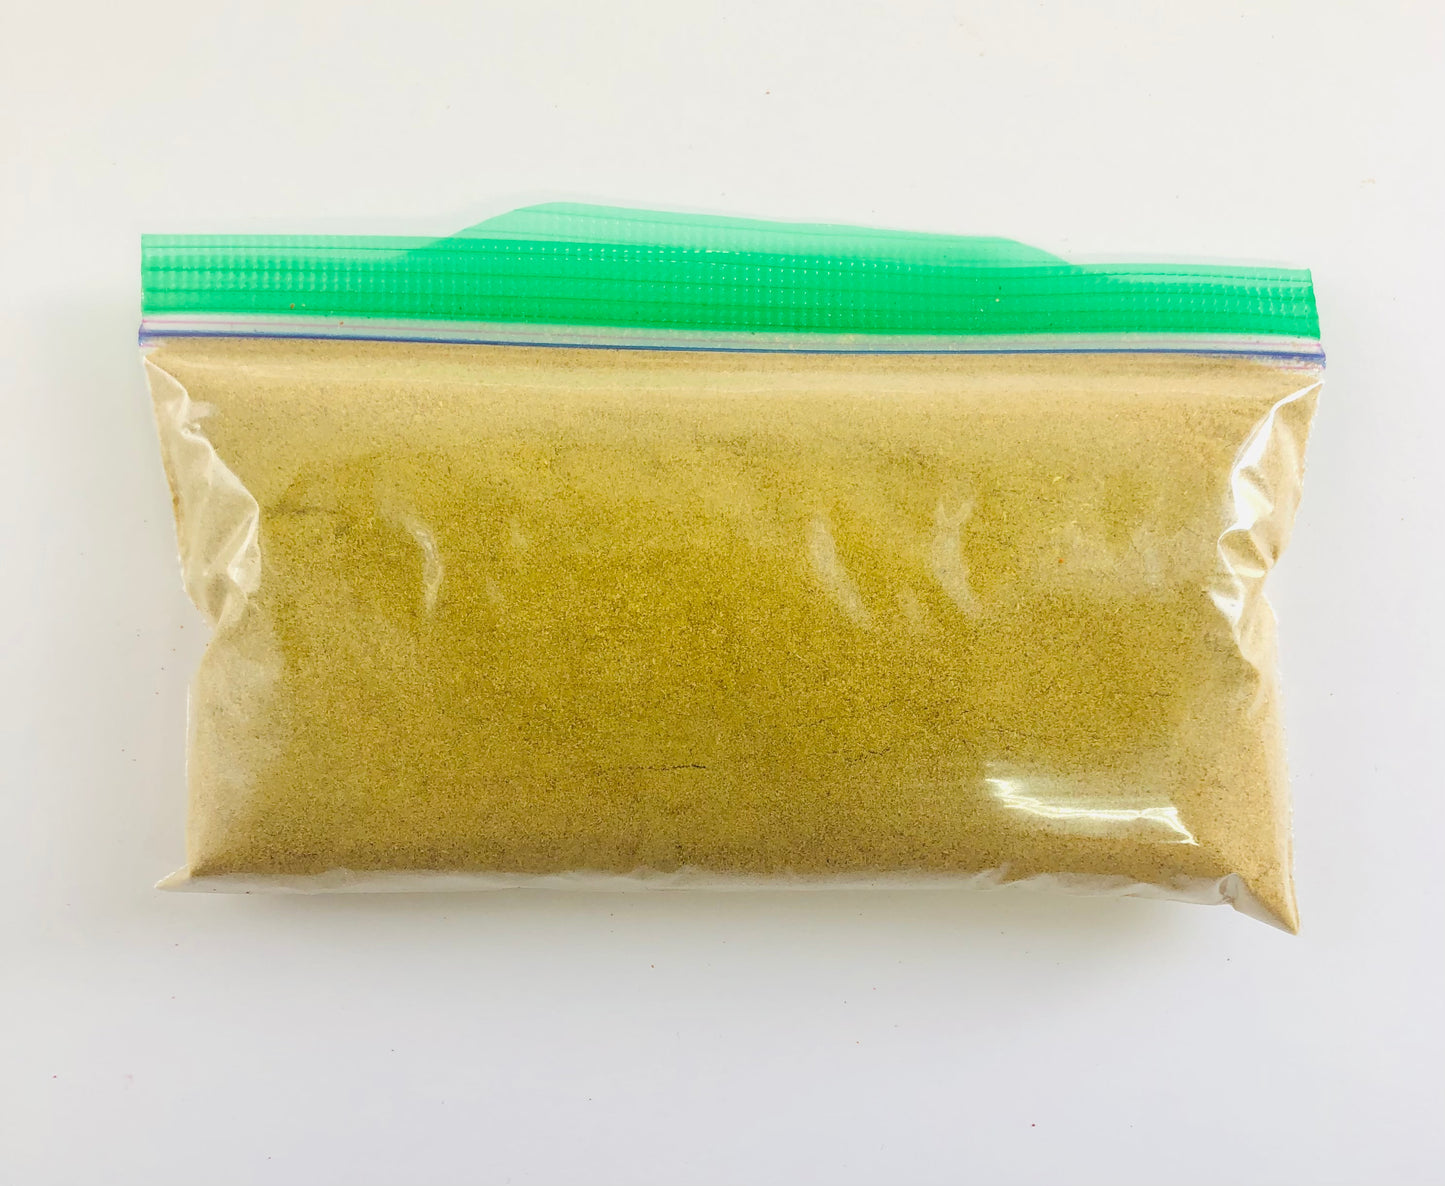 Hot Green Chile Powder